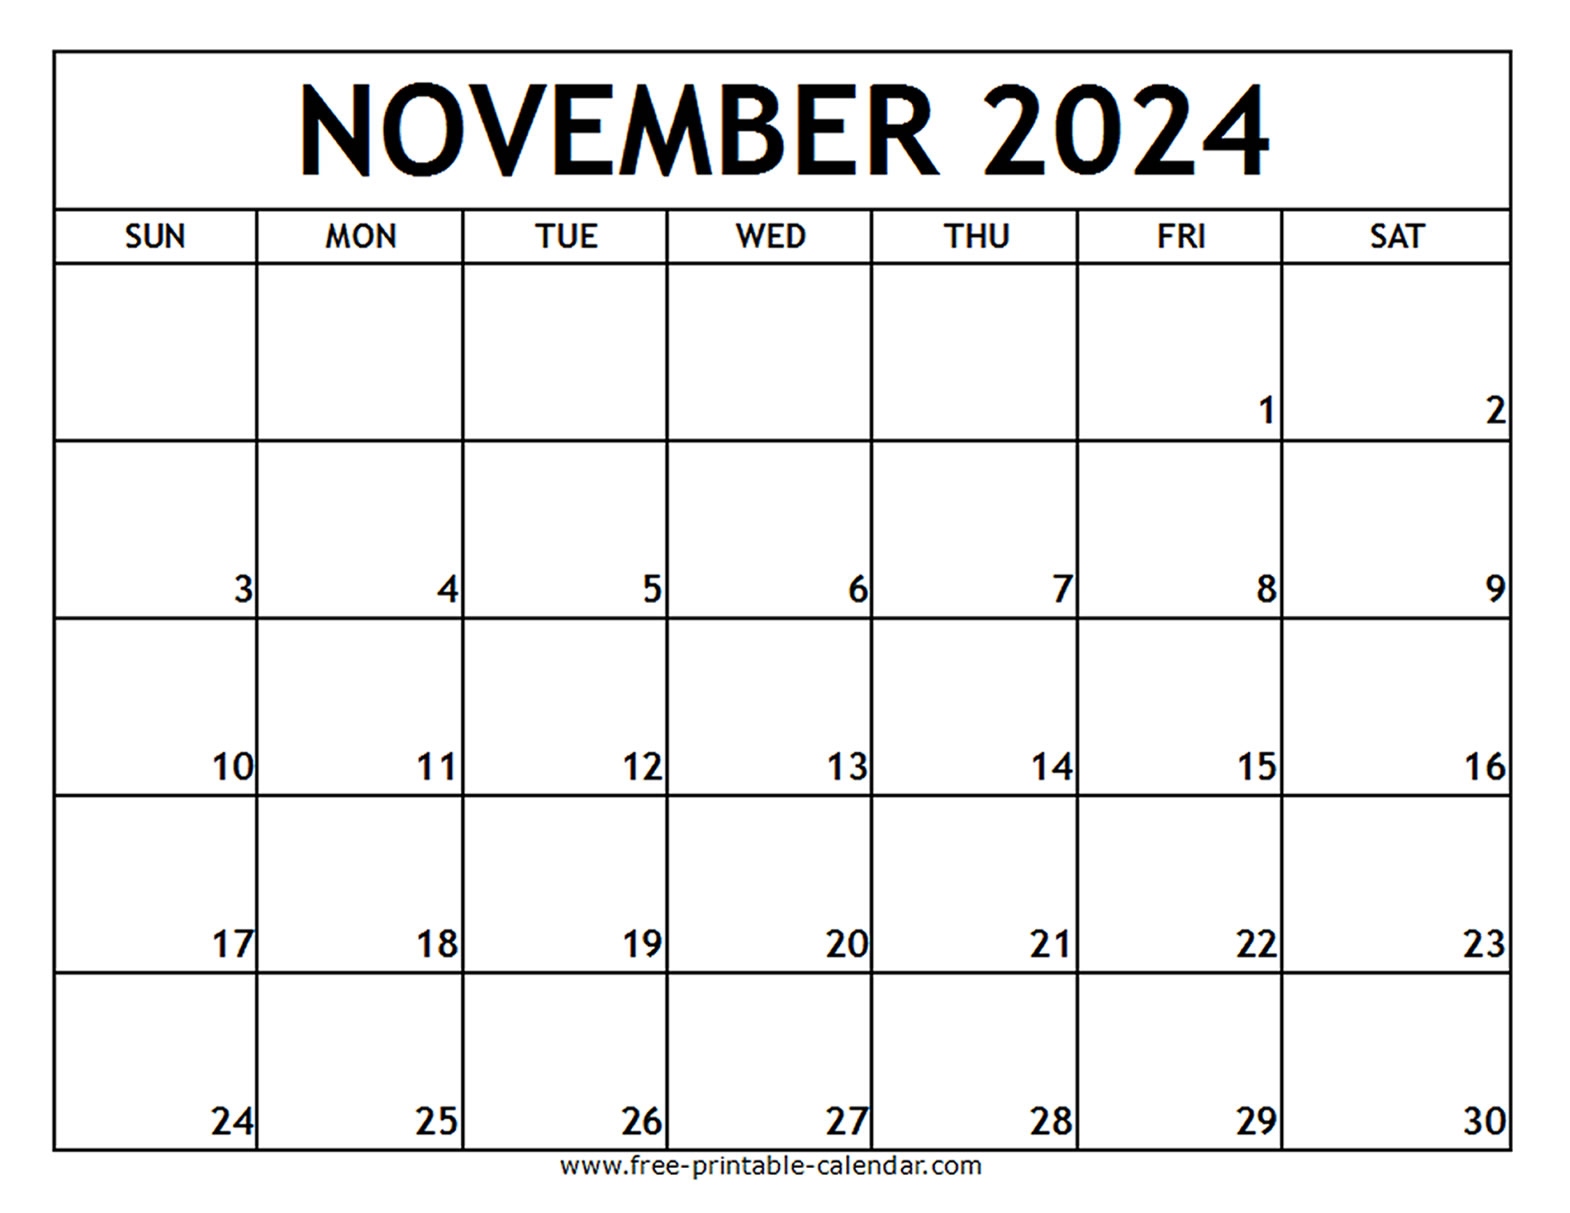 November 2024 Printable Calendar - Free-Printable-Calendar in Free Printable Calendar 2024 October November December